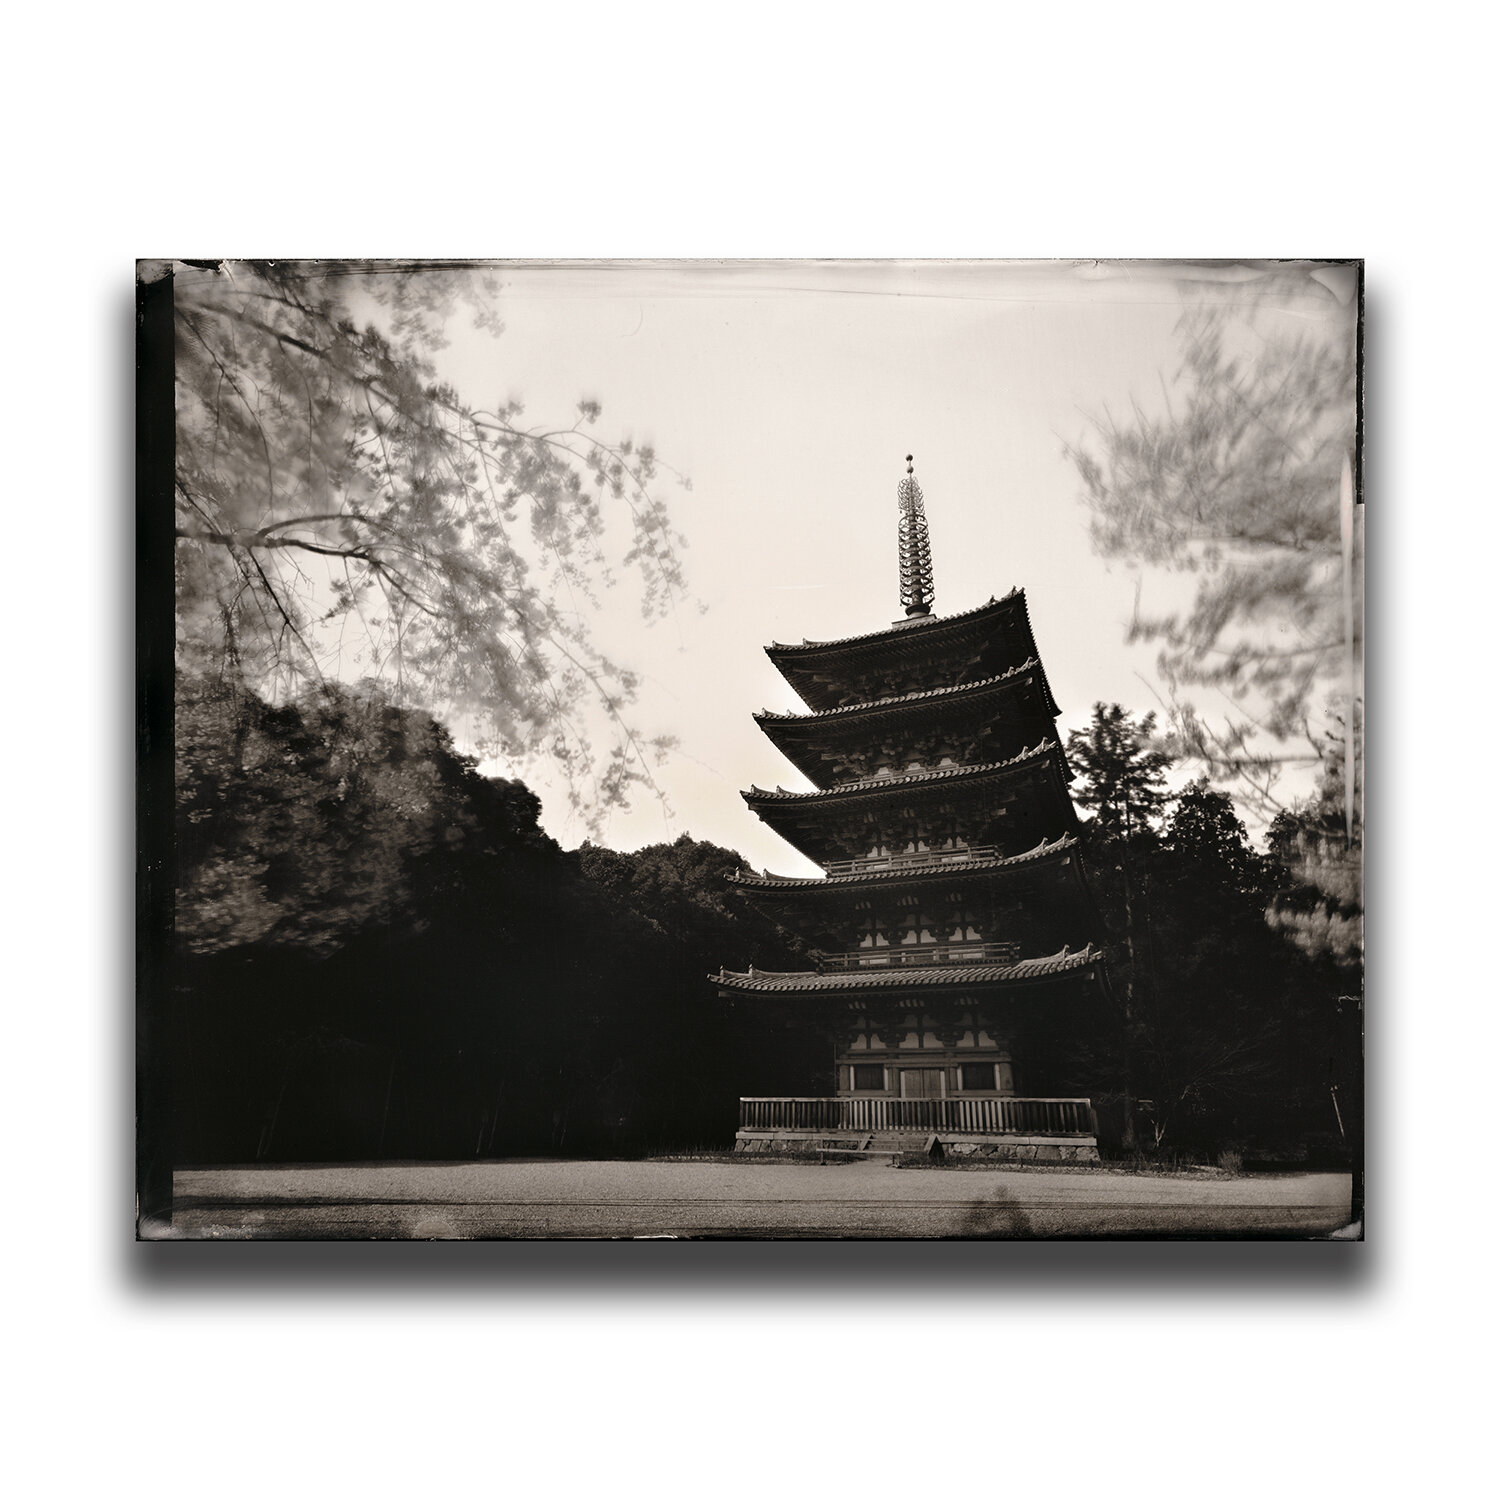 Kyoto・Daigo-ji(Temple)・The Five-storied　Pagoda/京都・醍醐寺・五重塔桜/교토・다이고사・5층탑/京都・醍醐寺・五重塔